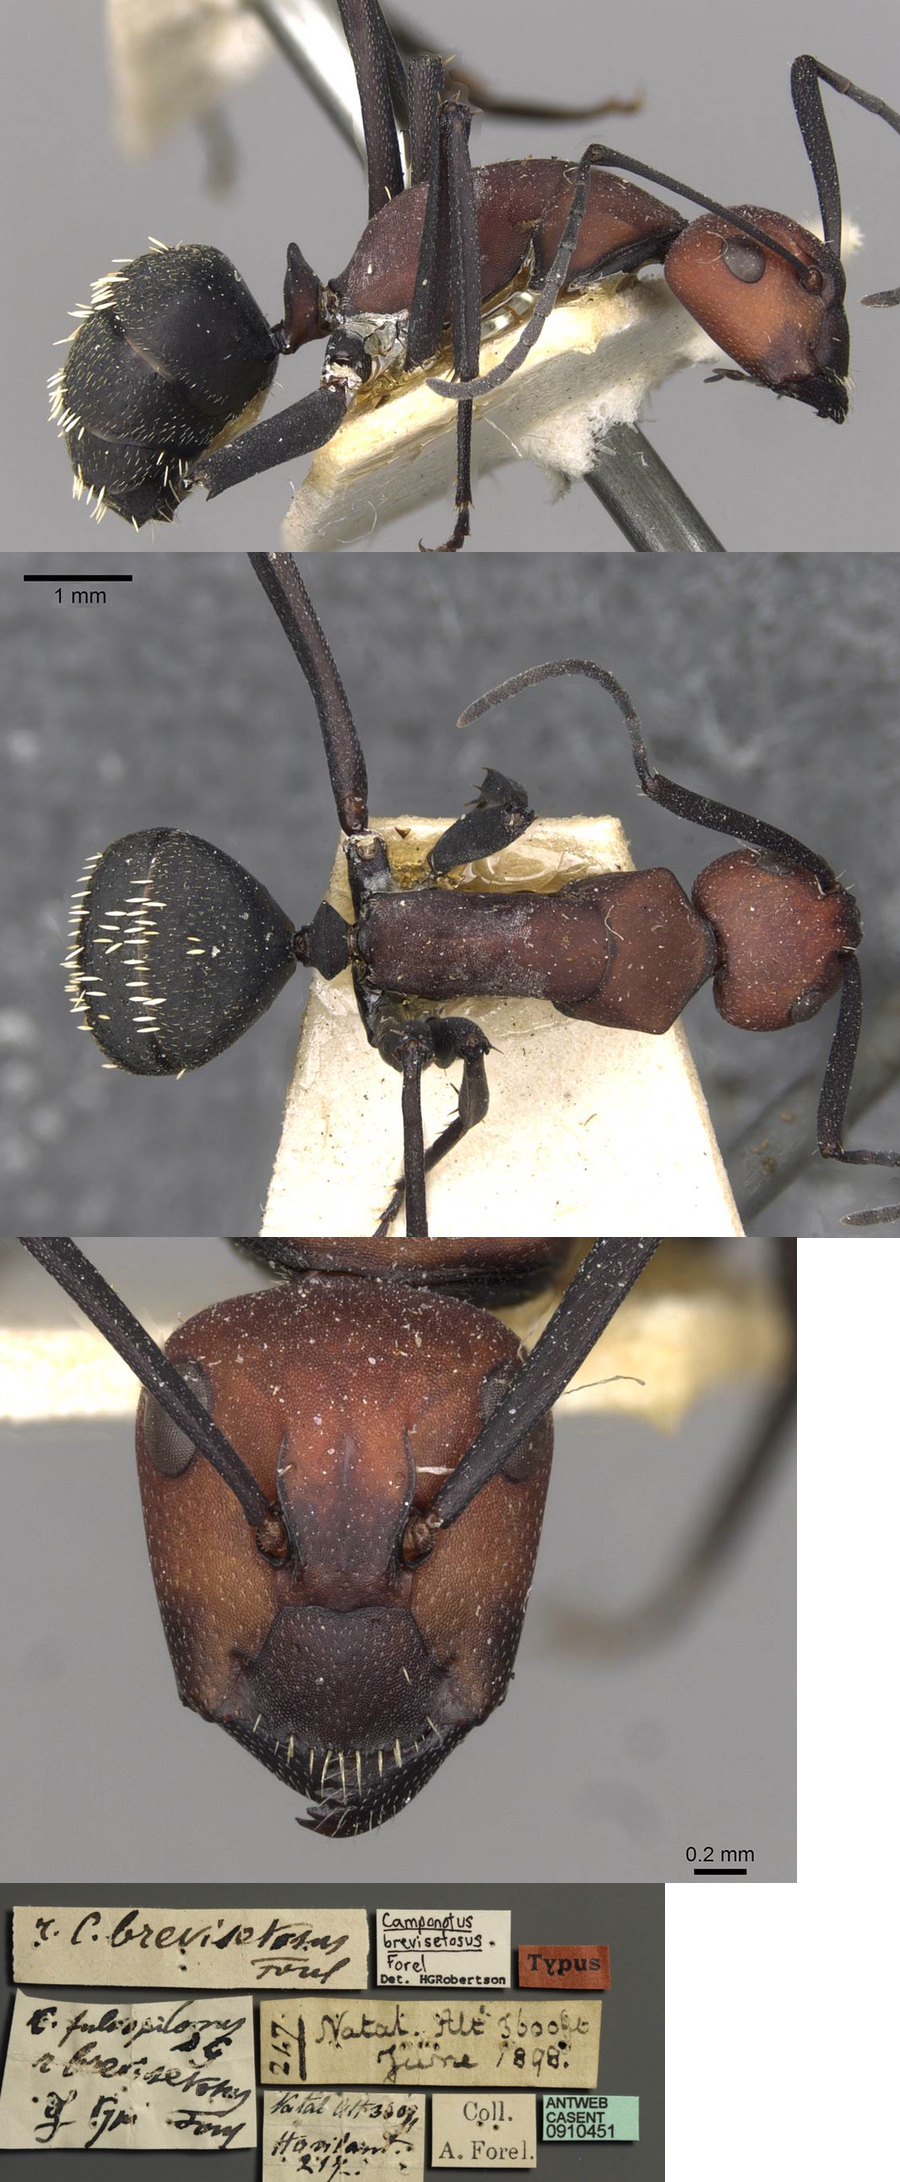 {Camponotus brevisetosus minor}